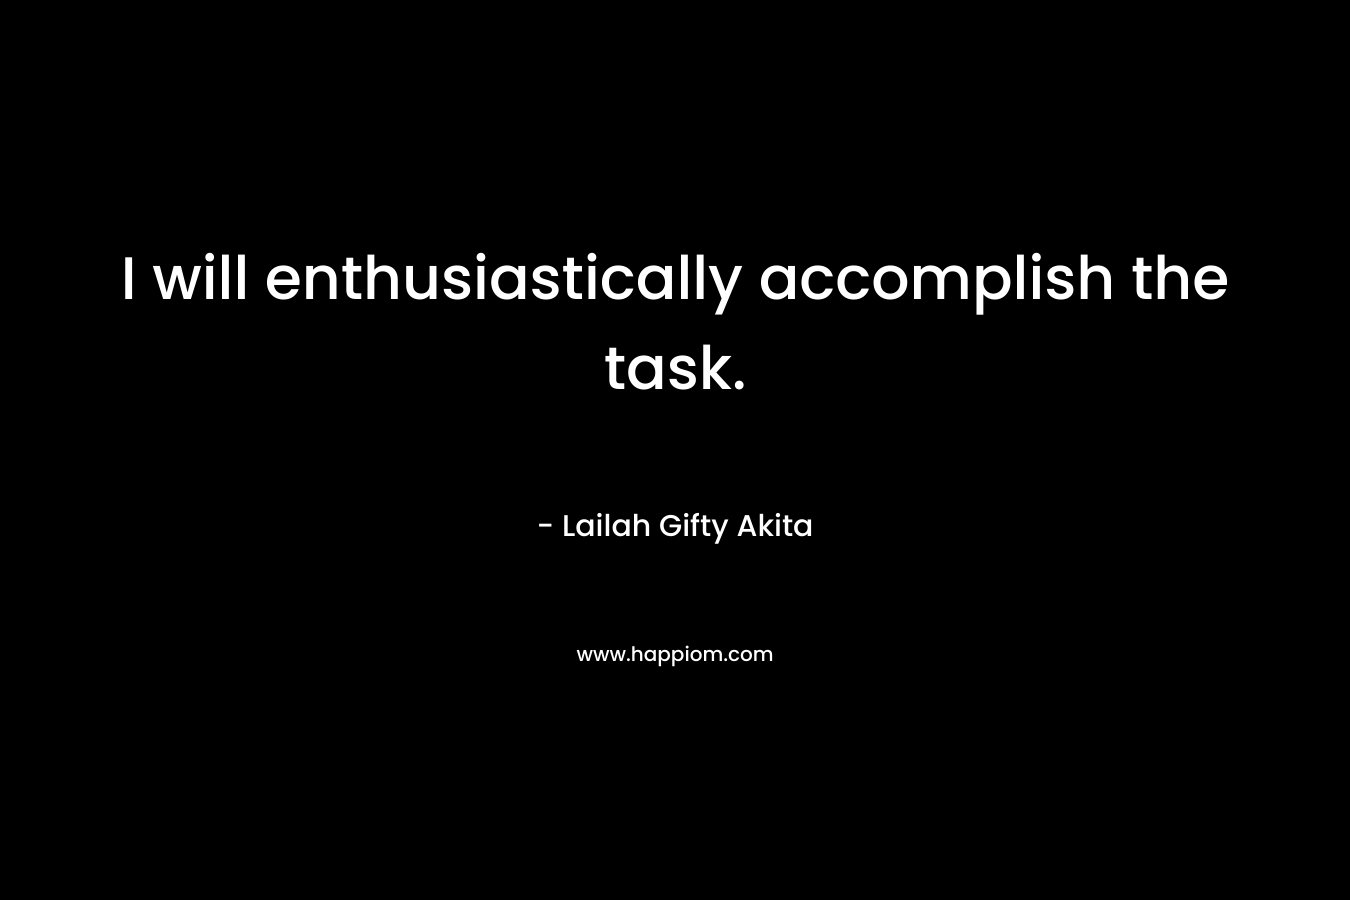 I will enthusiastically accomplish the task.